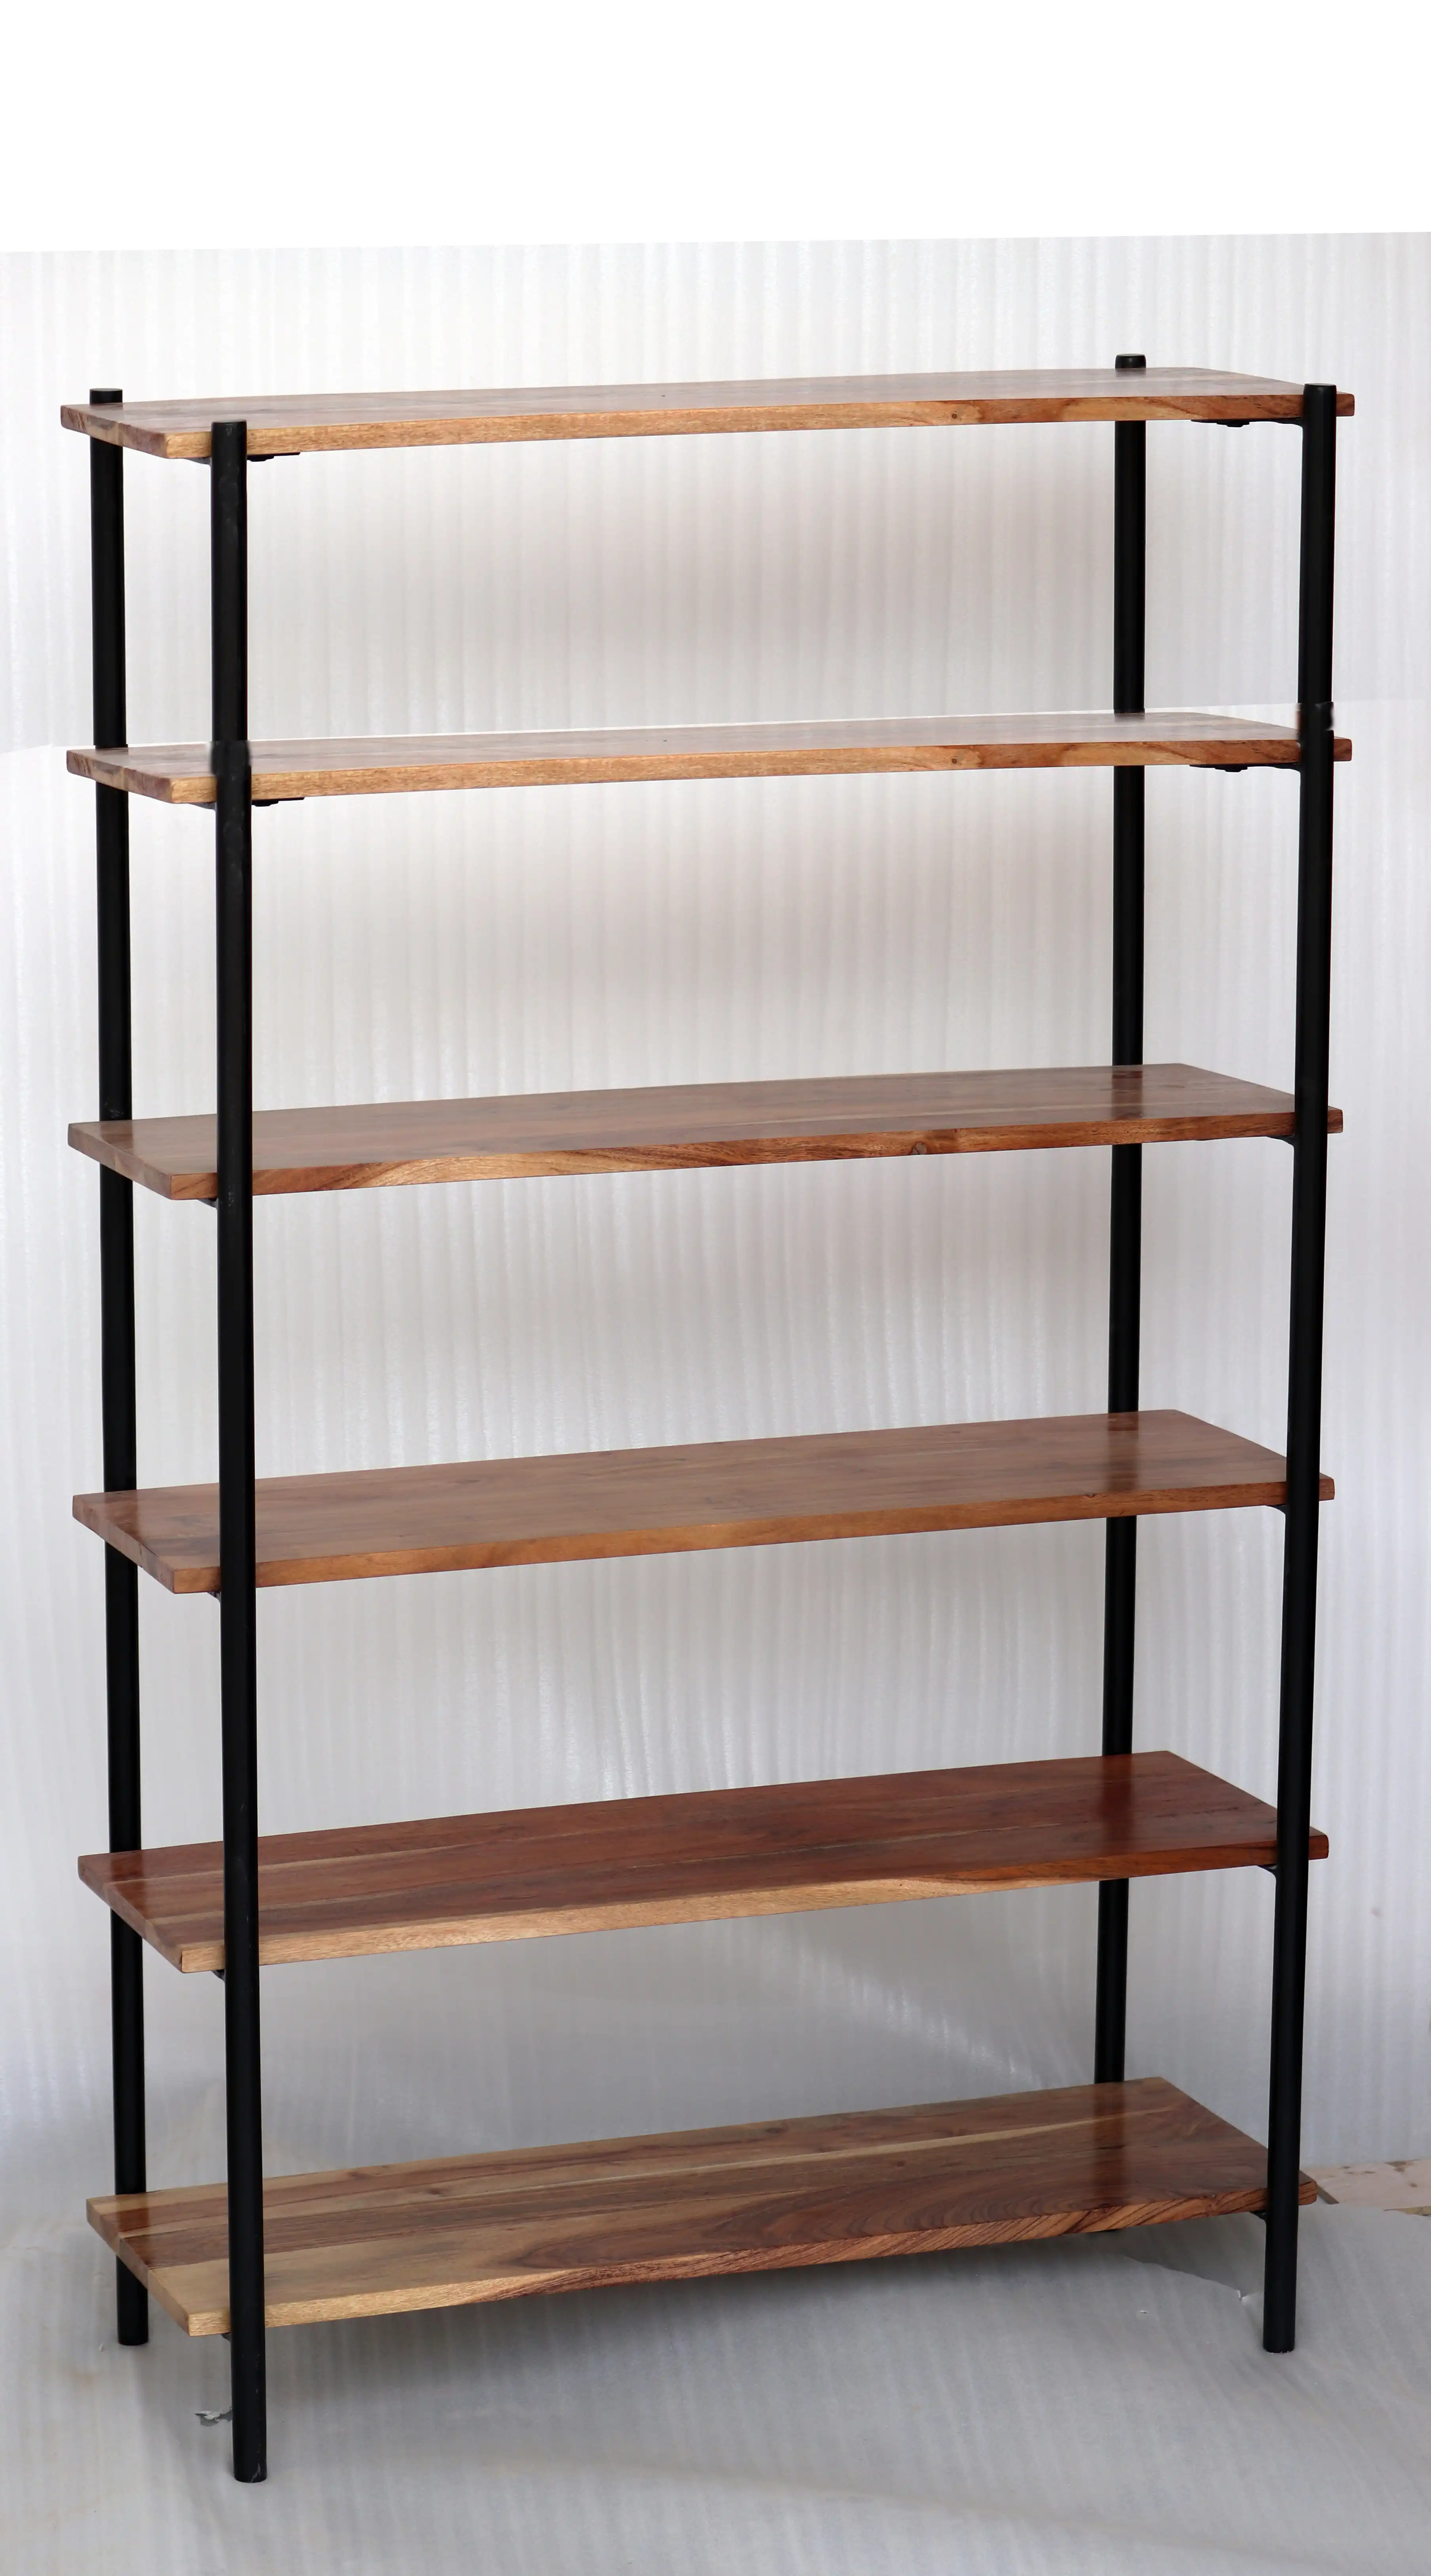 Acacia Wood & Iron Bookshelf with 6 Shelves
(KD) - popular handicrafts